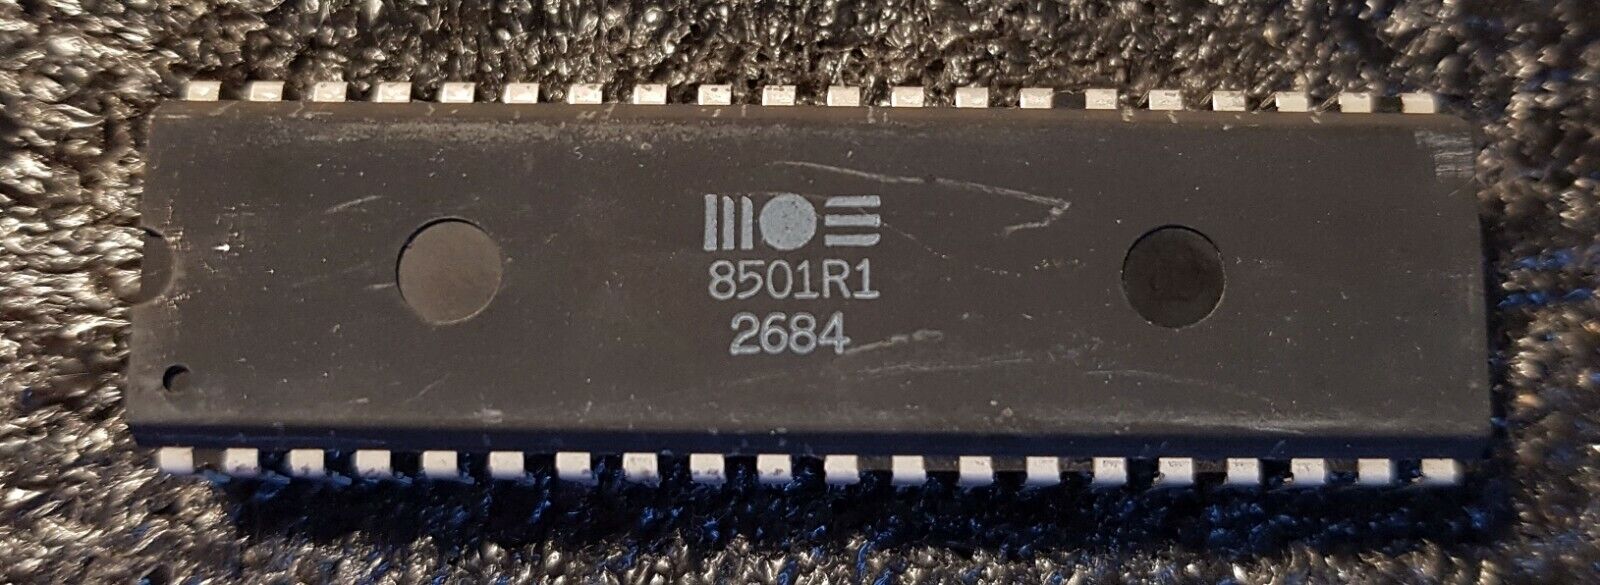 MOS 8501R1 CPU Chip, Microprocessor for Commodore 16/116/Plus/4, Genuine part.